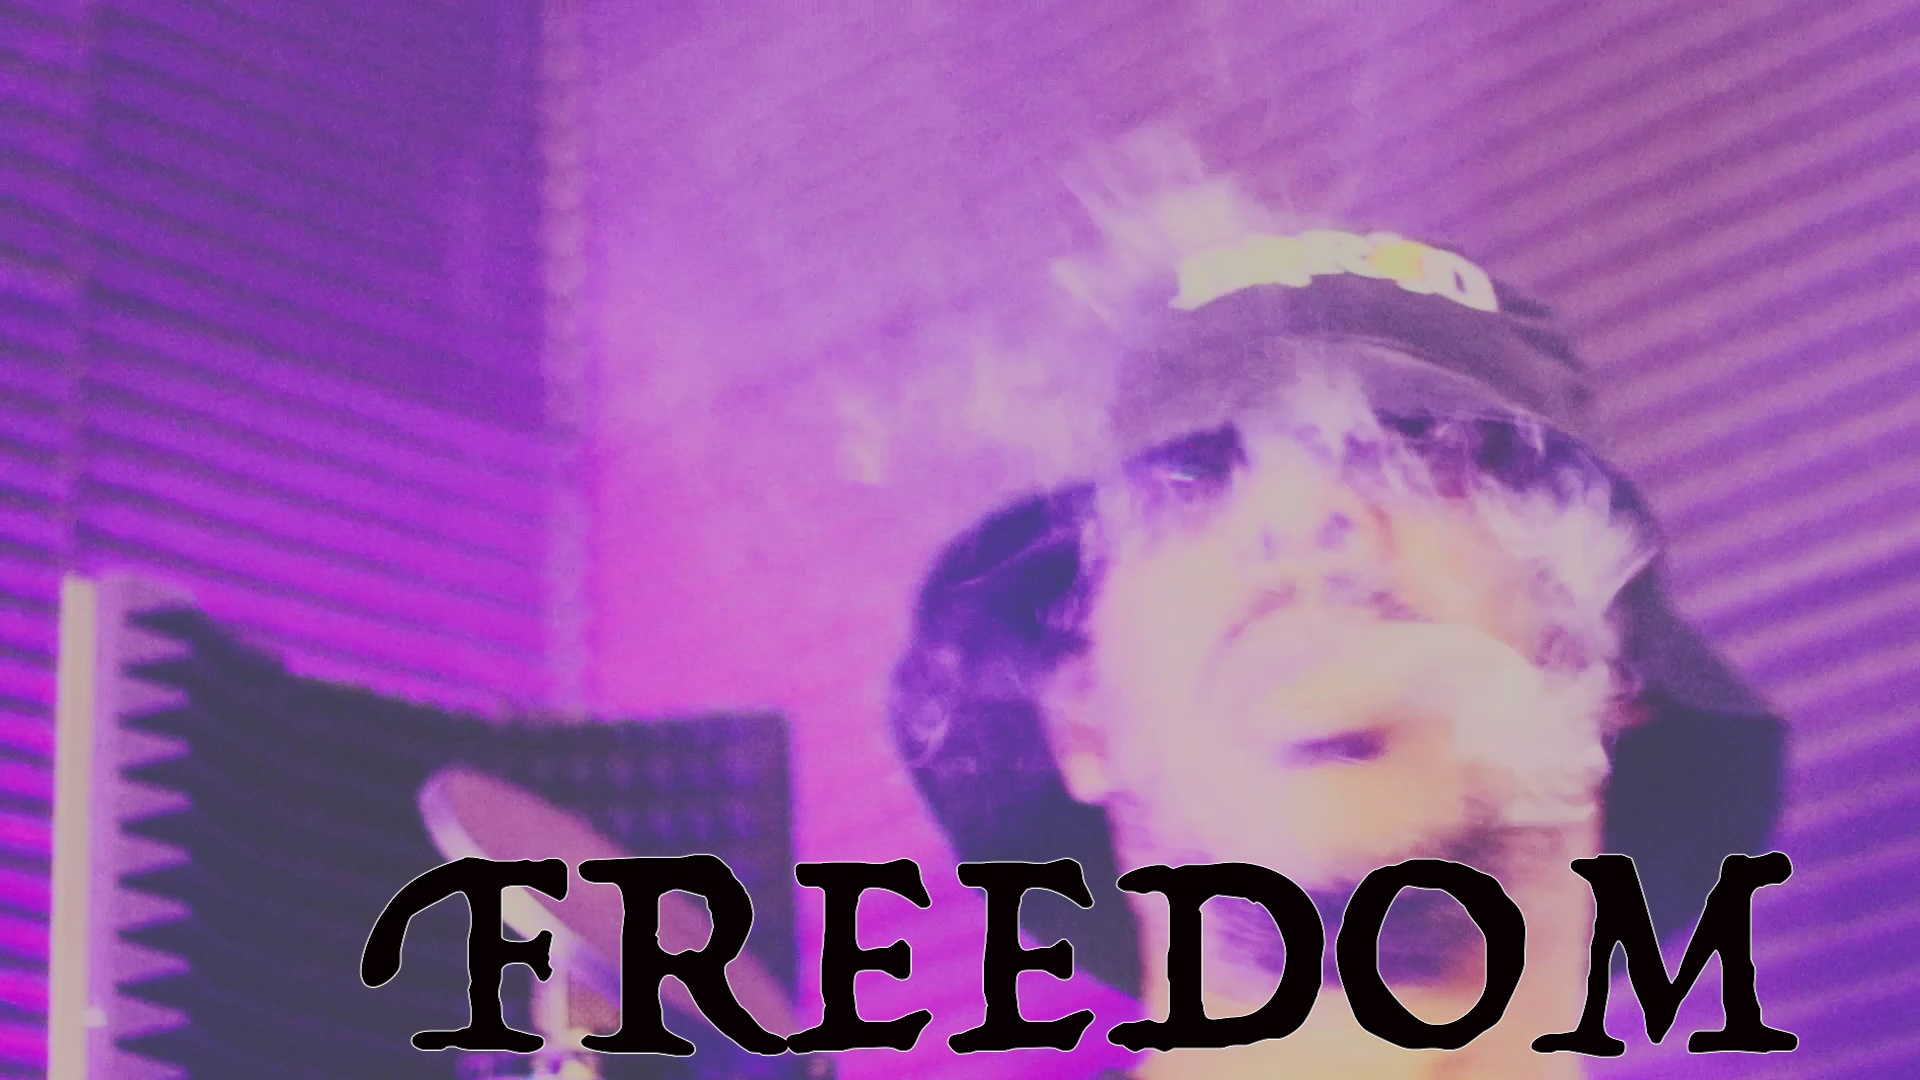 Freedom is My Religion